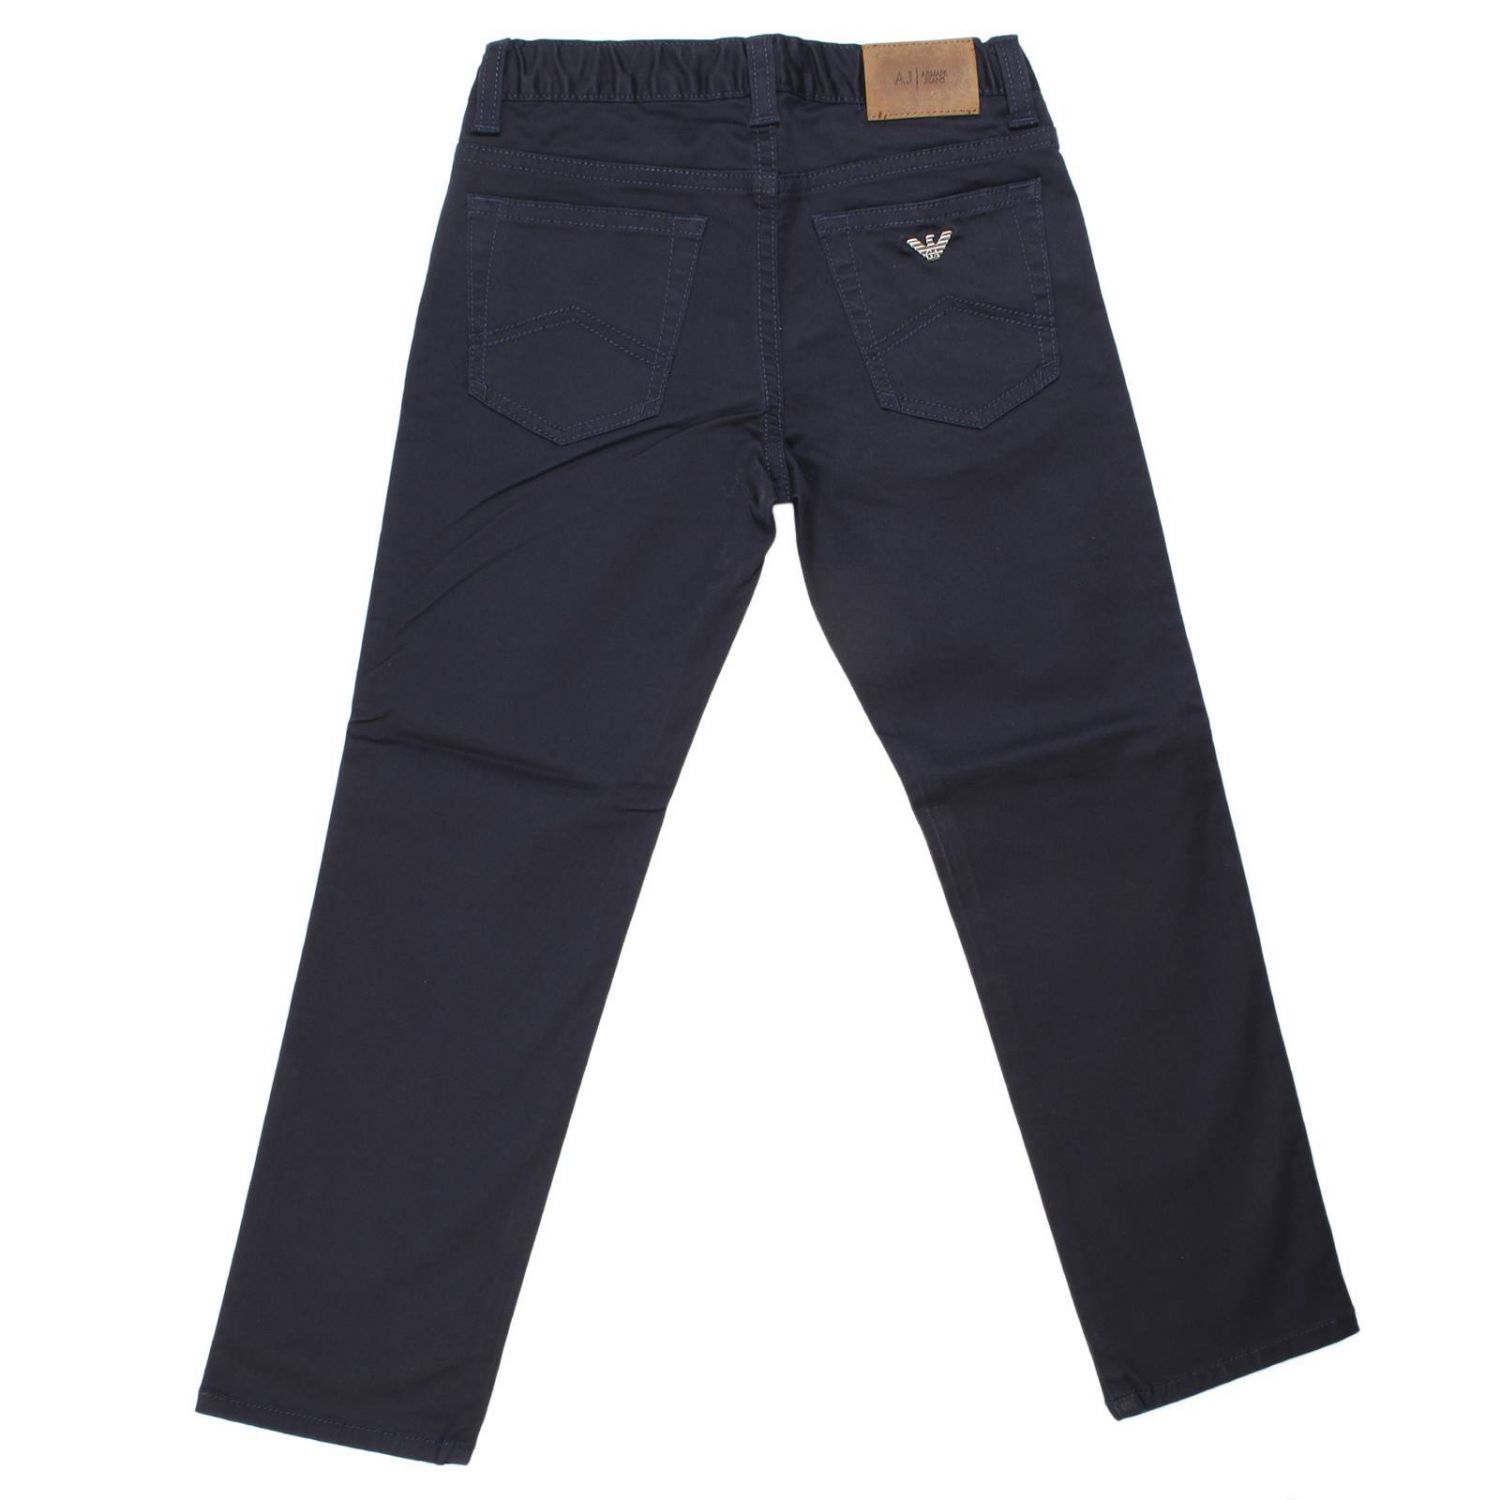 armani navy jeans